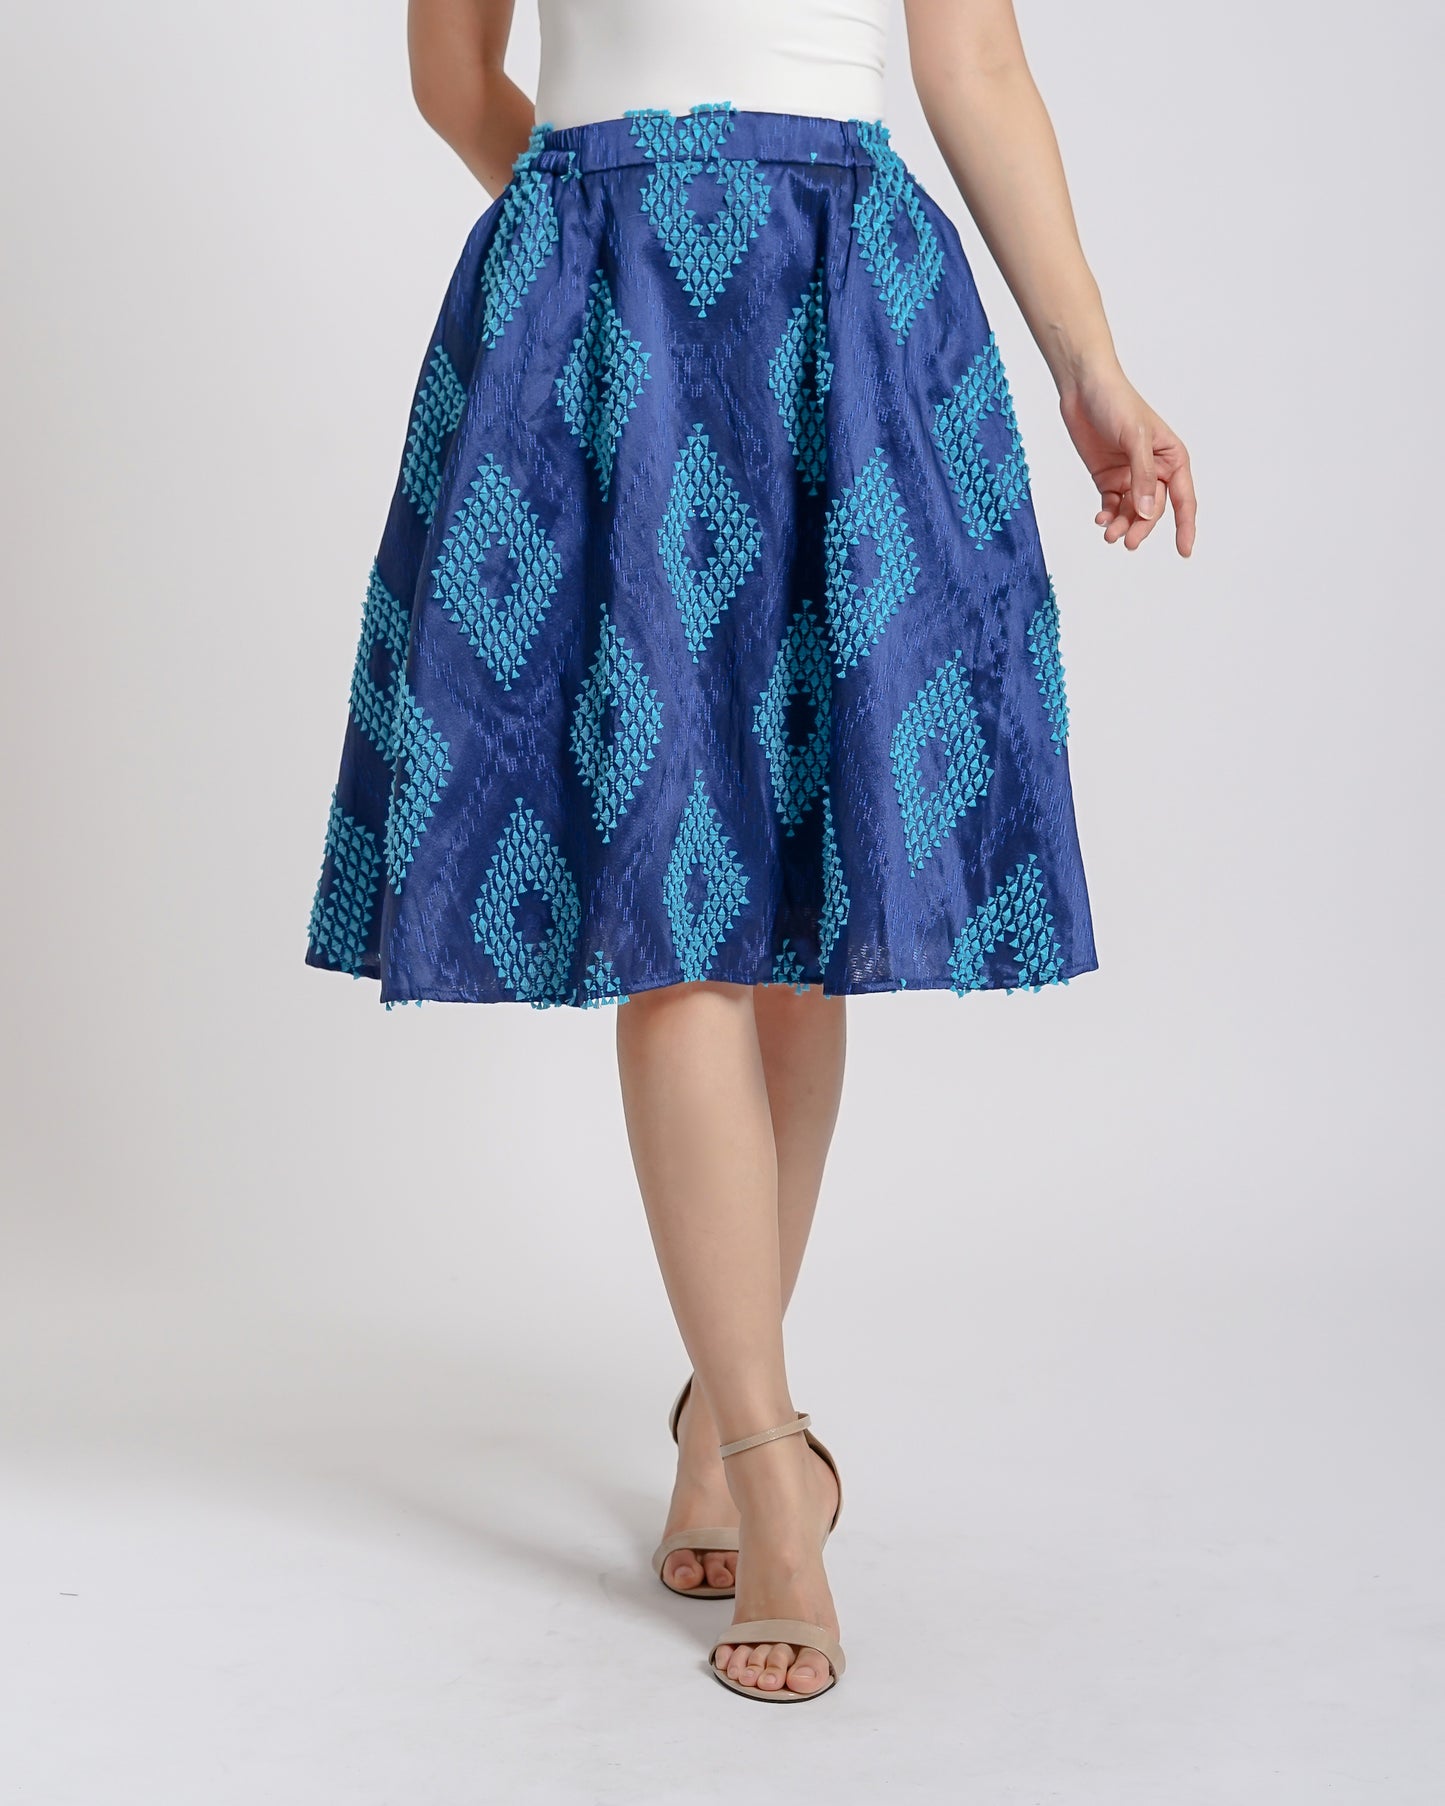 Vivienne A-Line tenun skirt blue turquoise